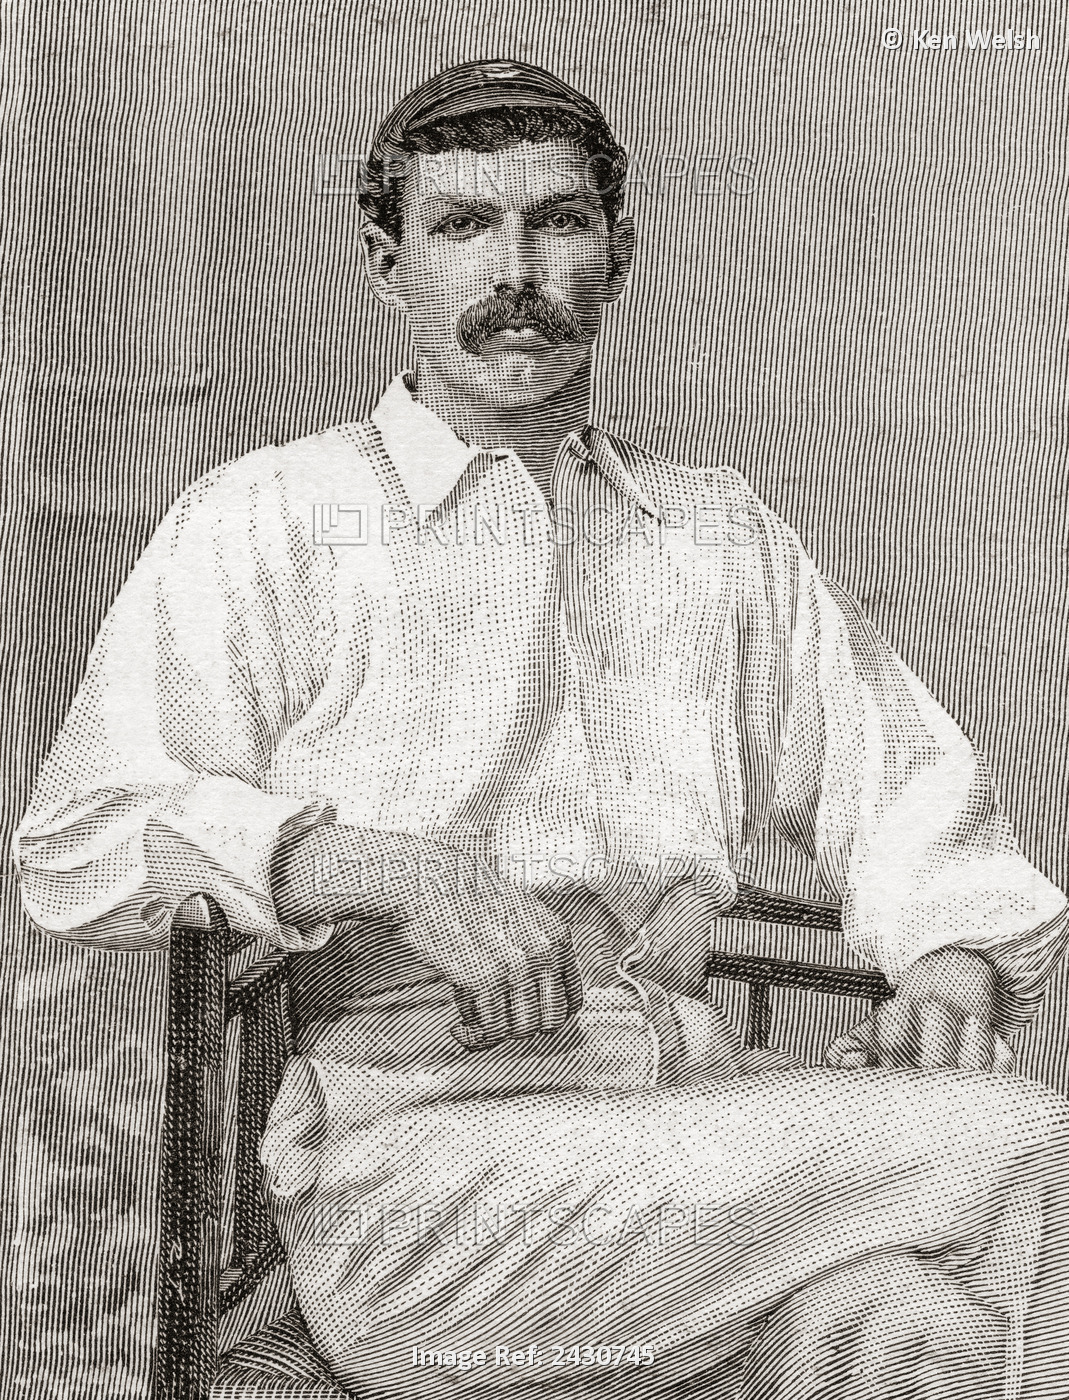 Tom Richardson, 1870